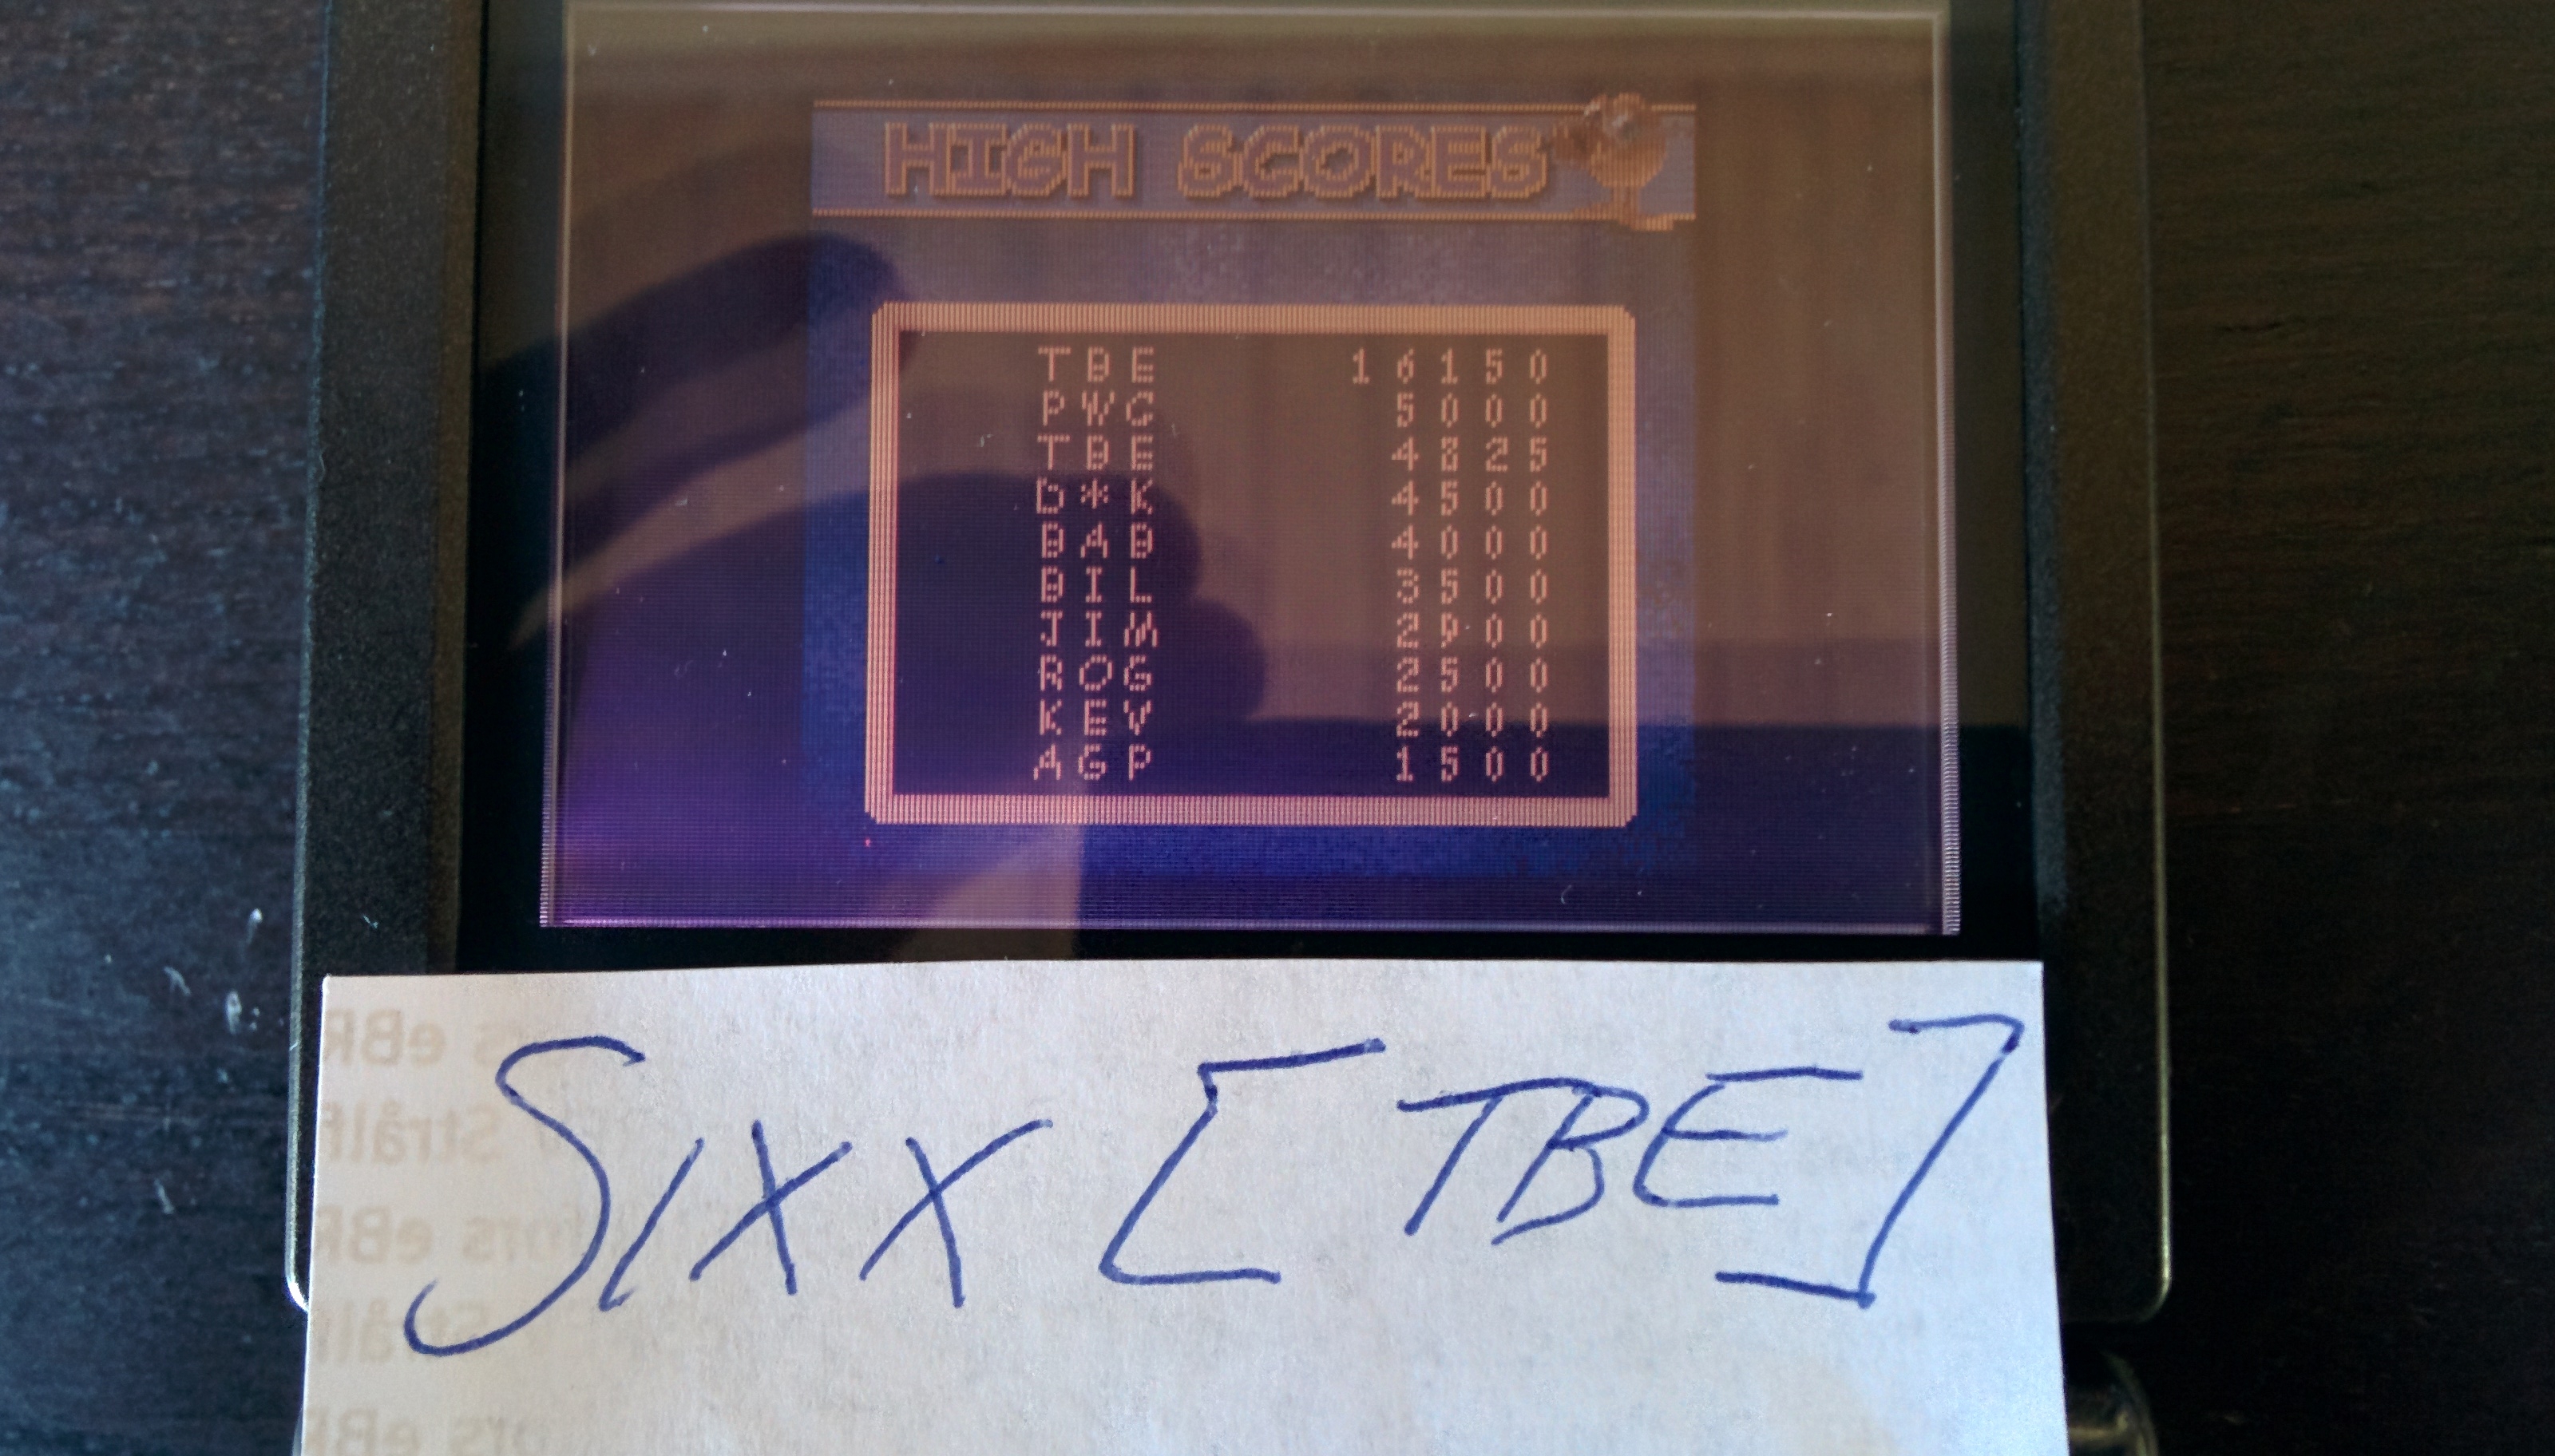 Sixx: Q*Bert: Arcade (Game Boy Color) 16,150 points on 2014-08-28 07:20:07